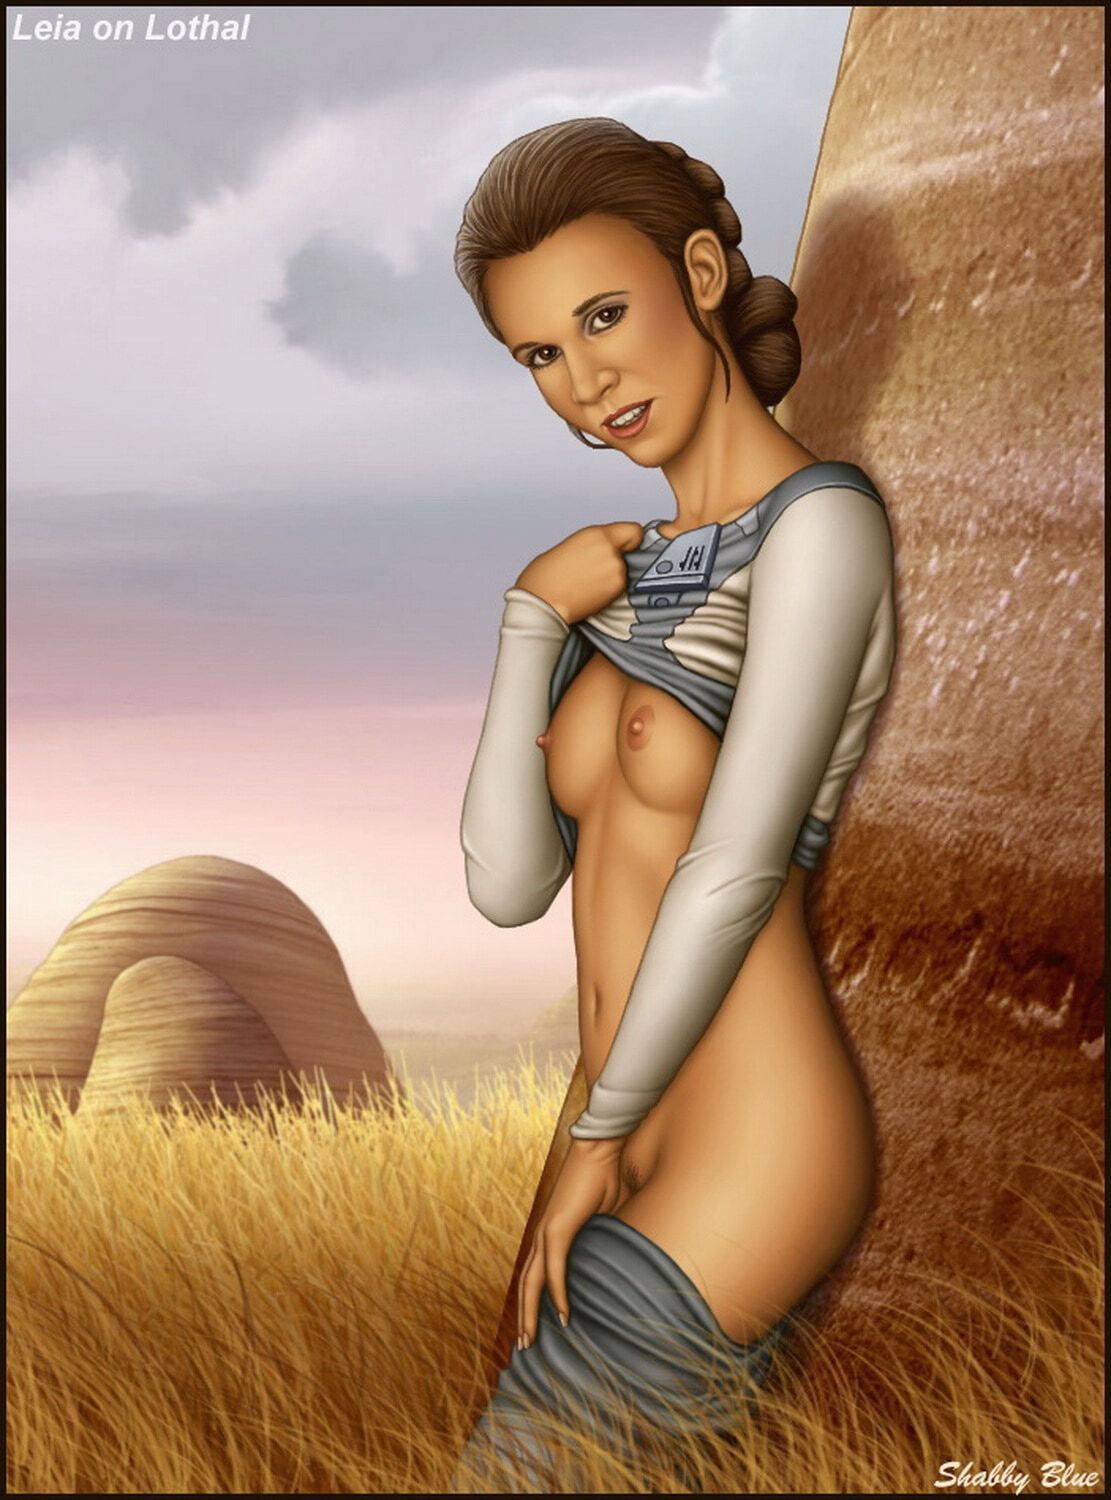 Star Wars Princess Leia Naked